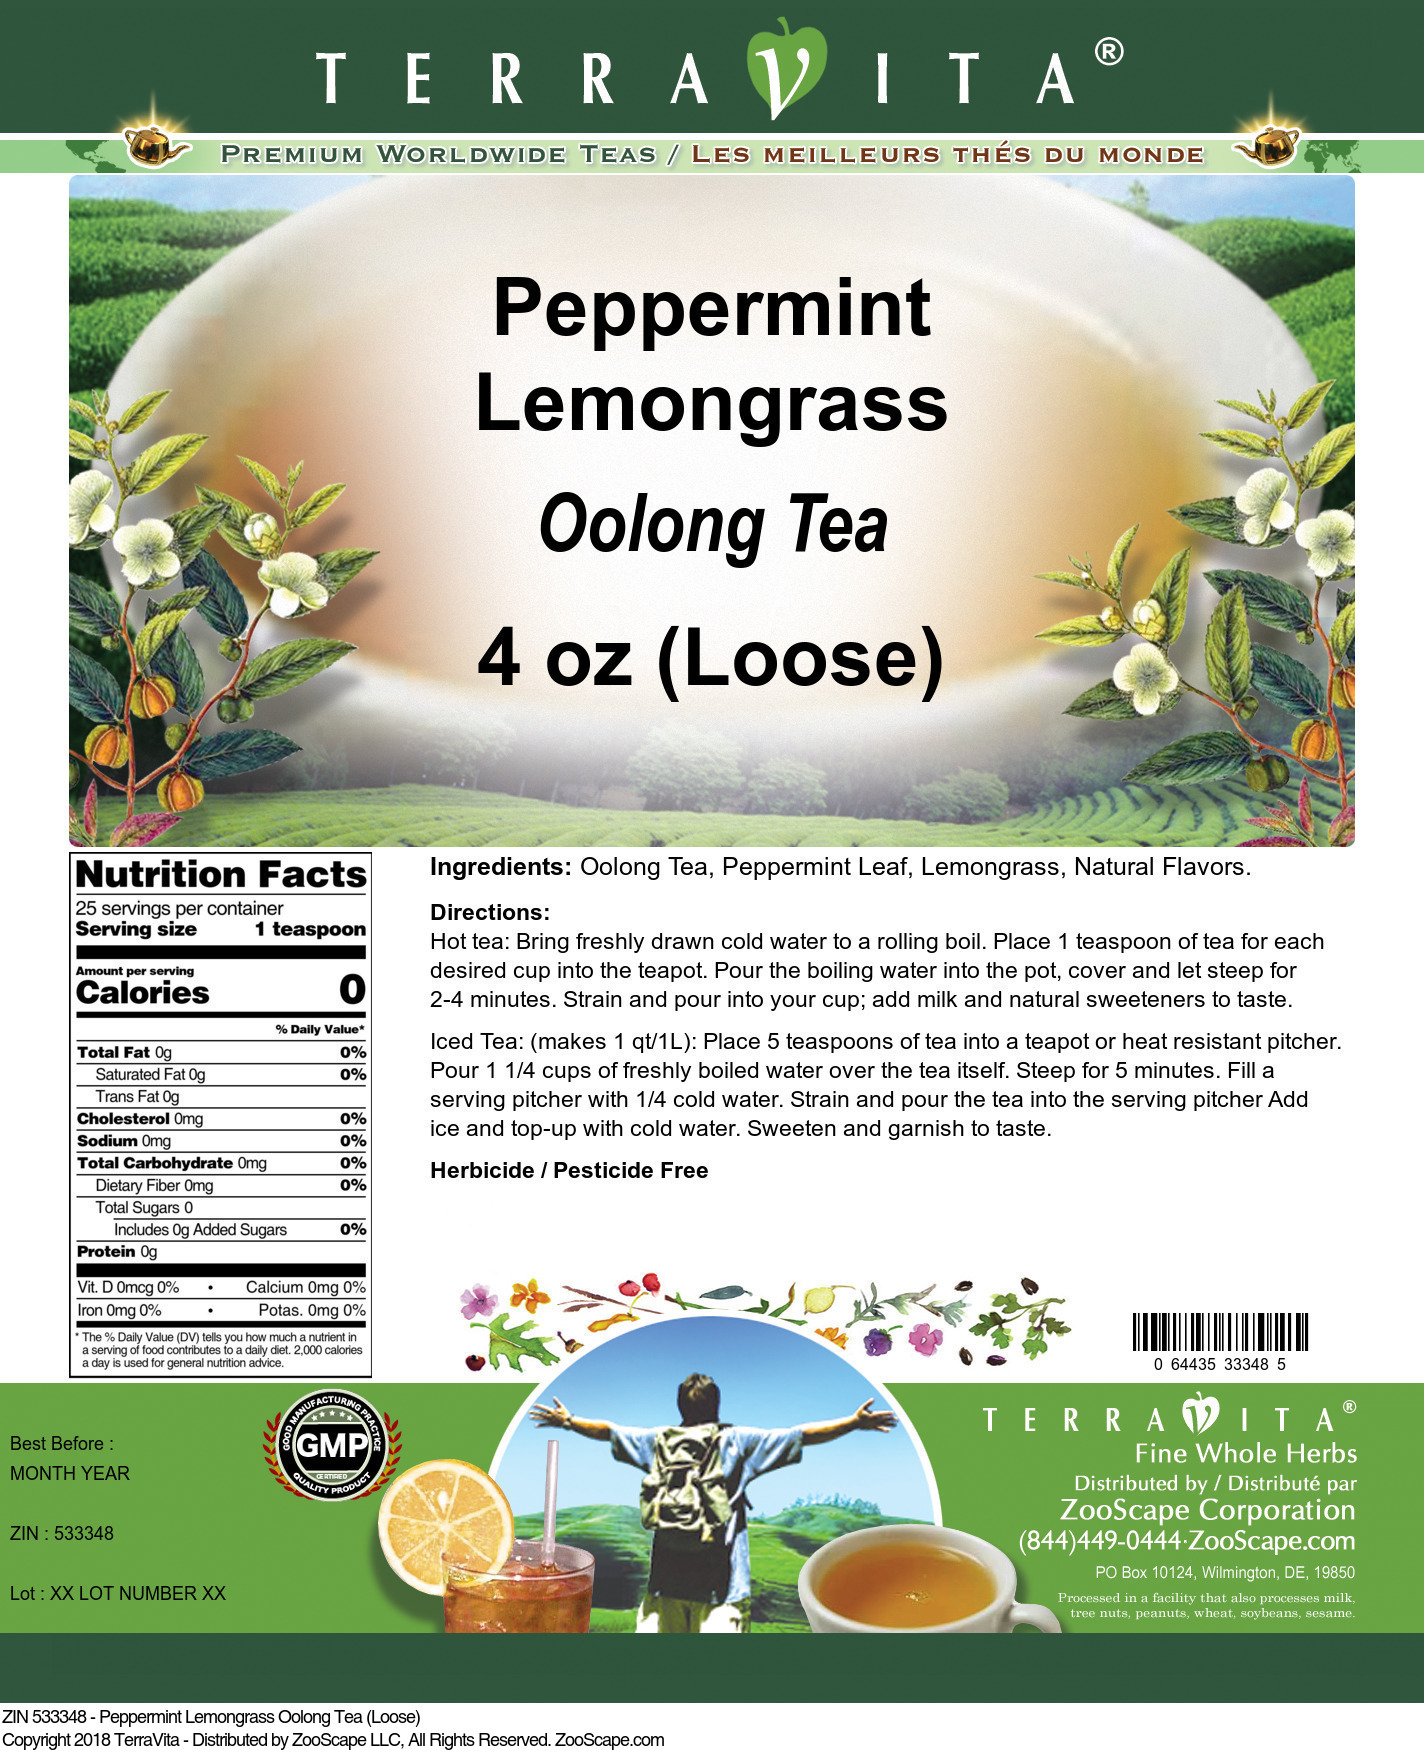 Peppermint Lemongrass Oolong Tea (Loose) - Label